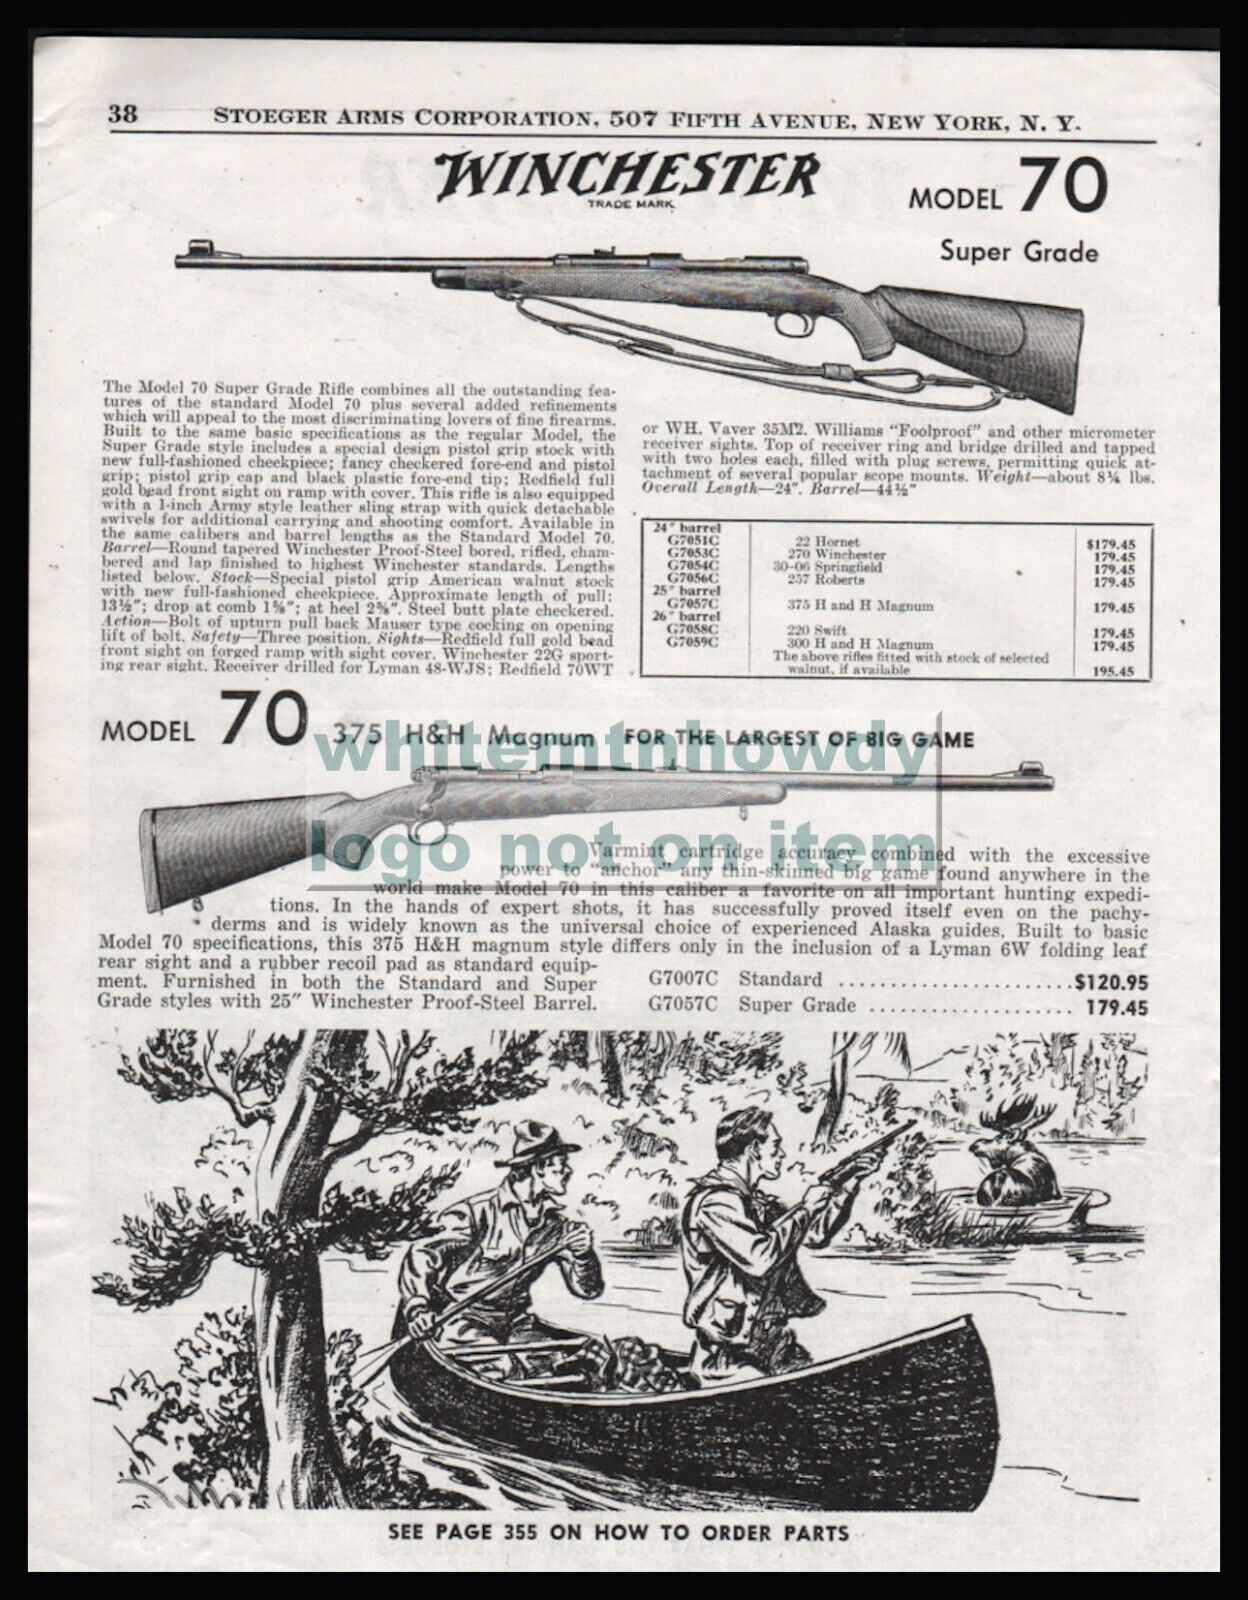 1953 WINCHESTER Model 70 Super Grade and .375 H&H Magnum Rifle PRINT AD